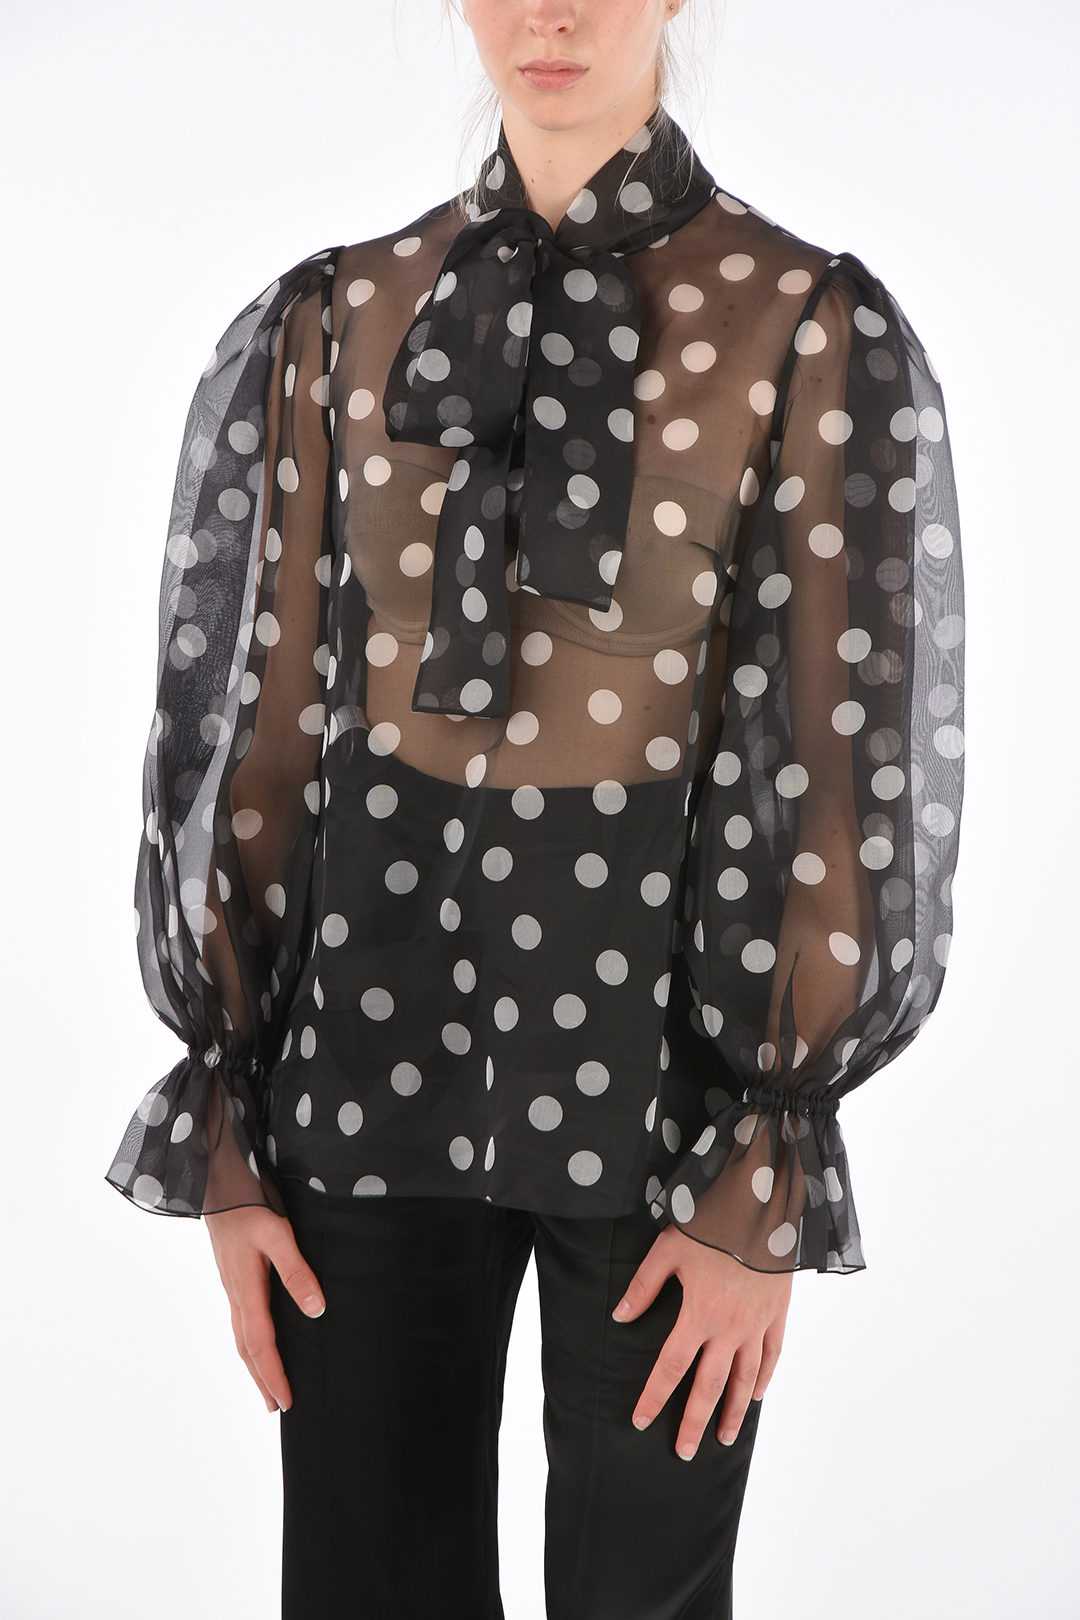 Dolce & Gabbana Polka Dot Printed Tie Neck Blouse women - Glamood Outlet